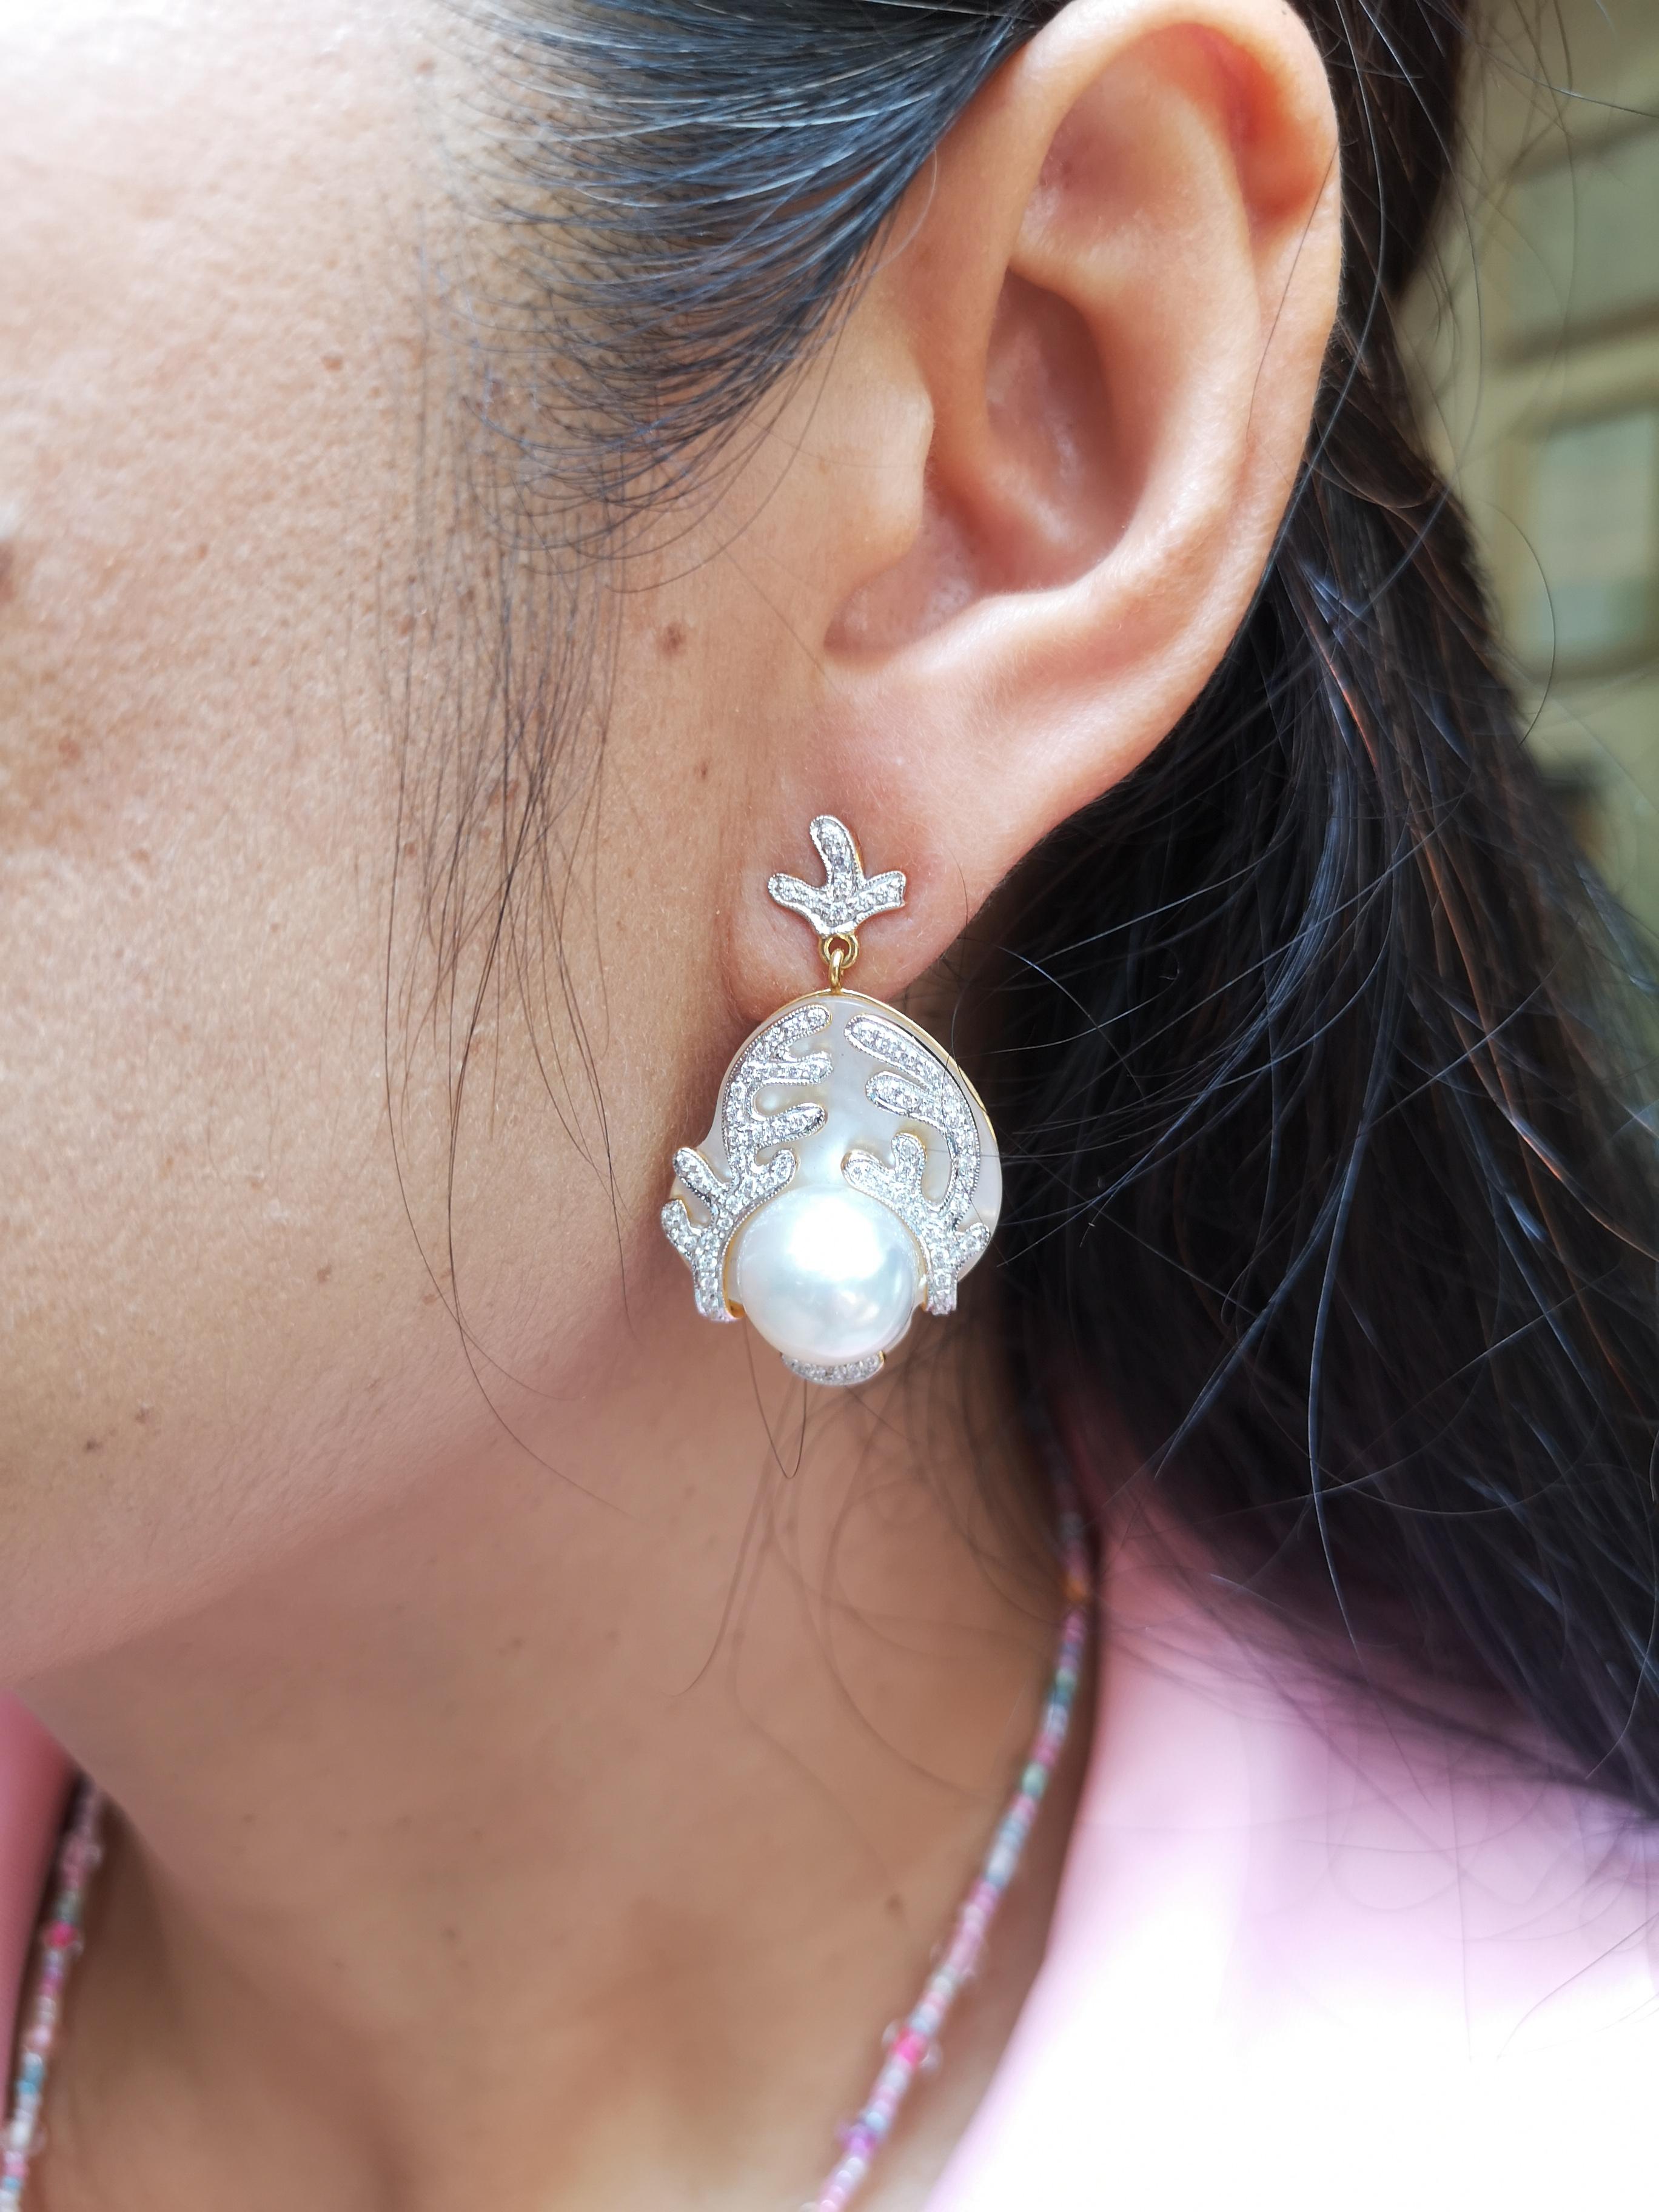 Pearl with Diamond 0.62 carats Earrings set in 18 Karat Gold Settings

Width: 2.2 cm
Length: 3.6 cm 

